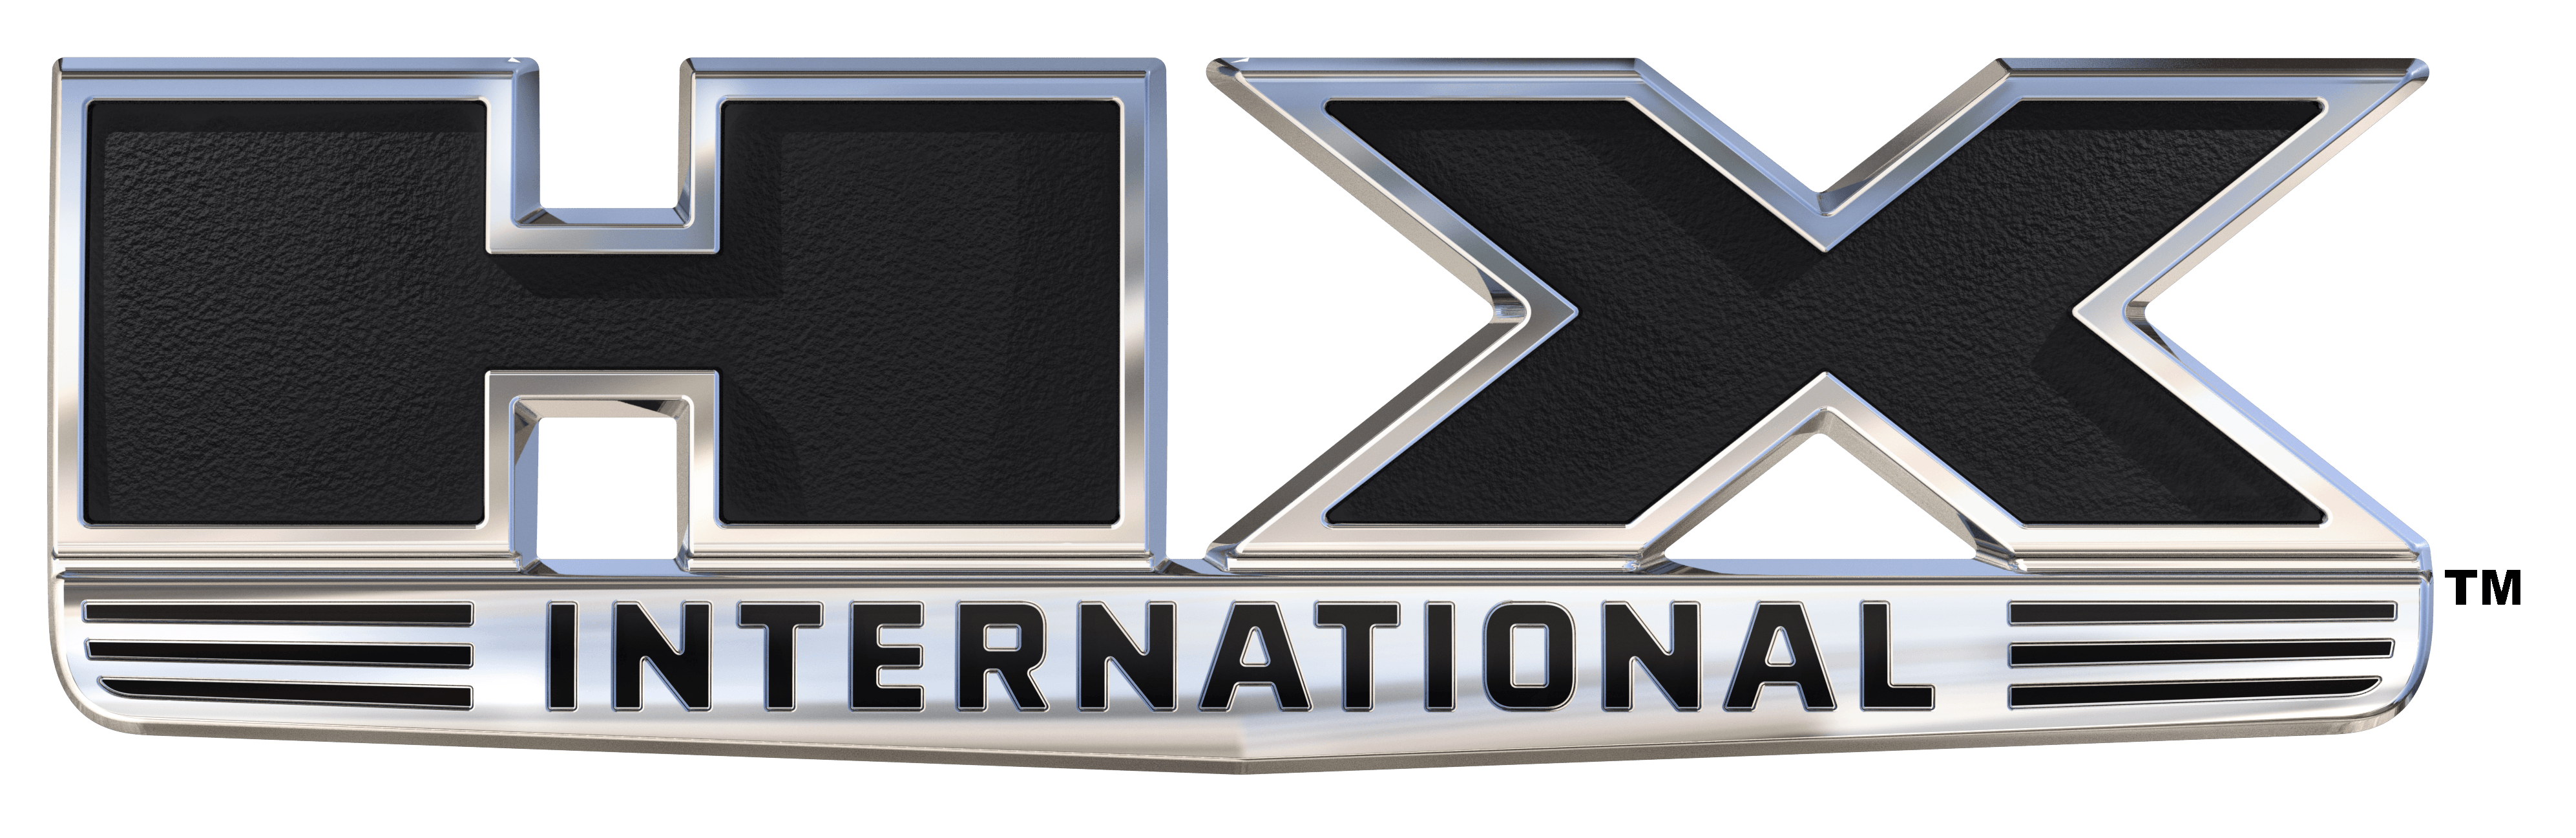 Hx Logo - International debuts new HX Series vocational trucks - Truck News